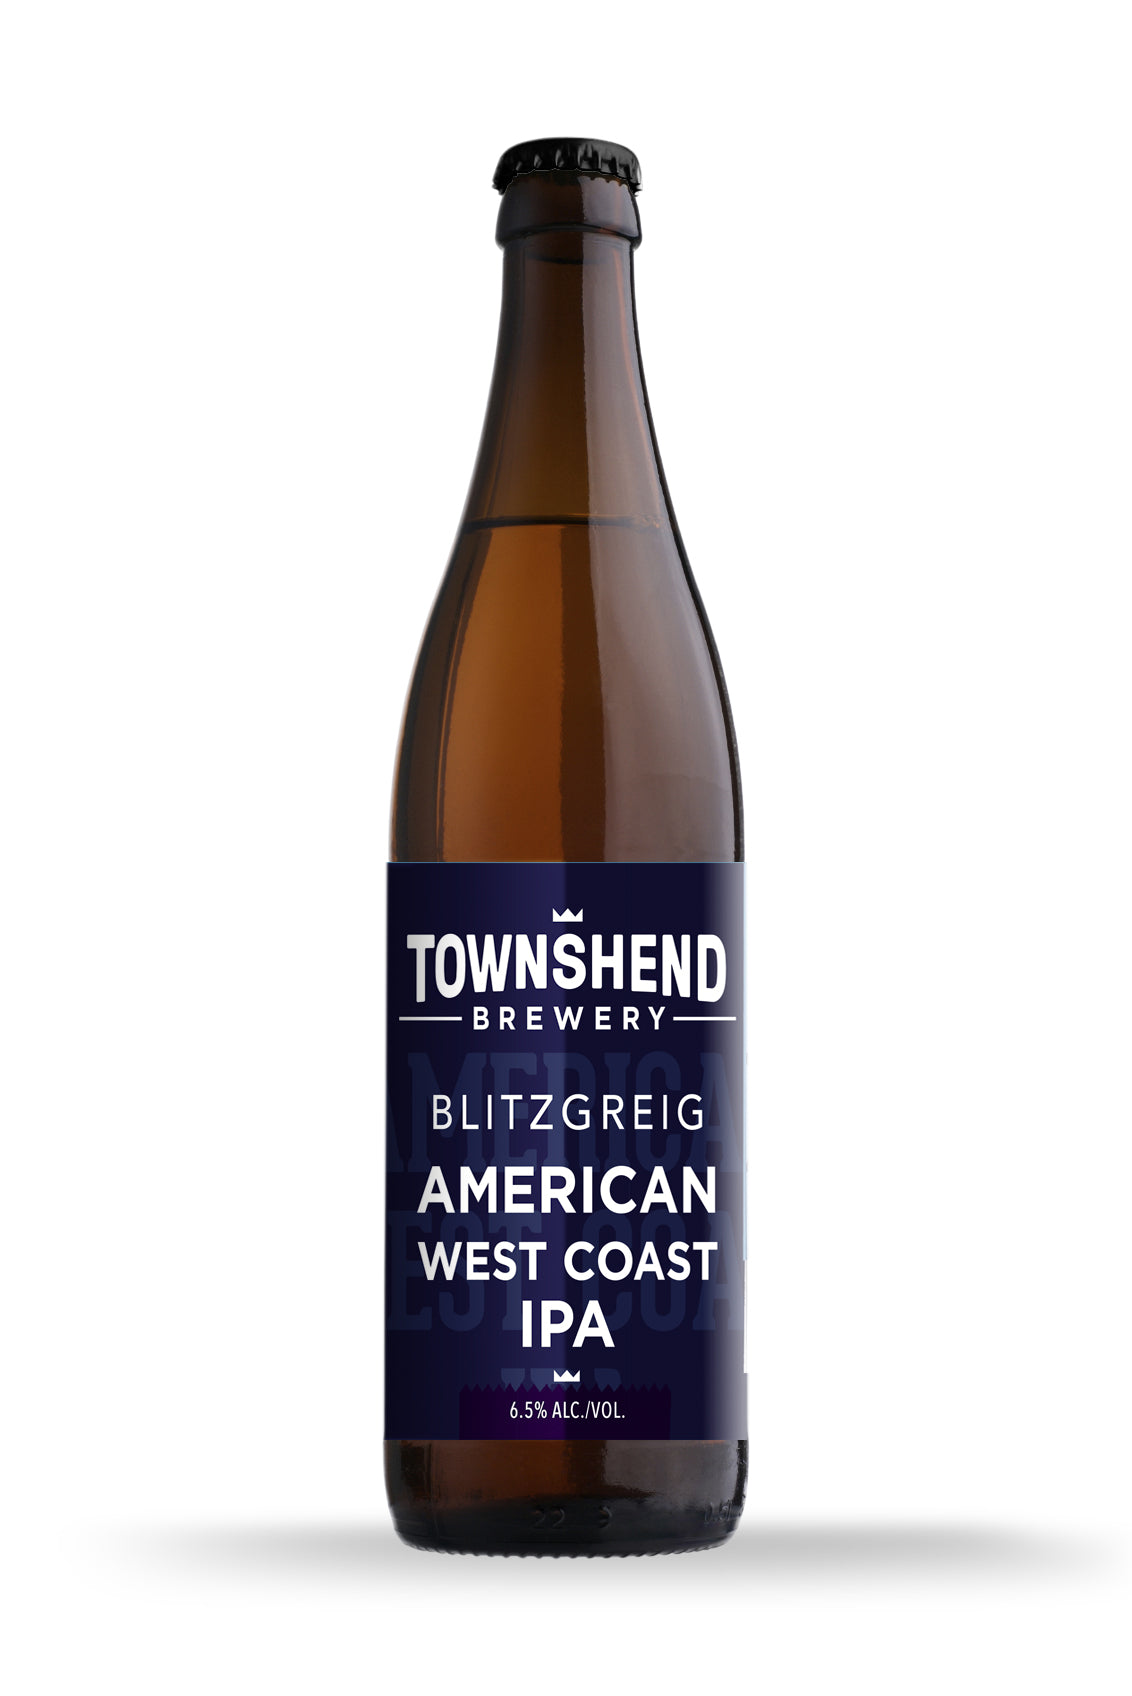 Townshend Blitzgreig Westcoast American IPA